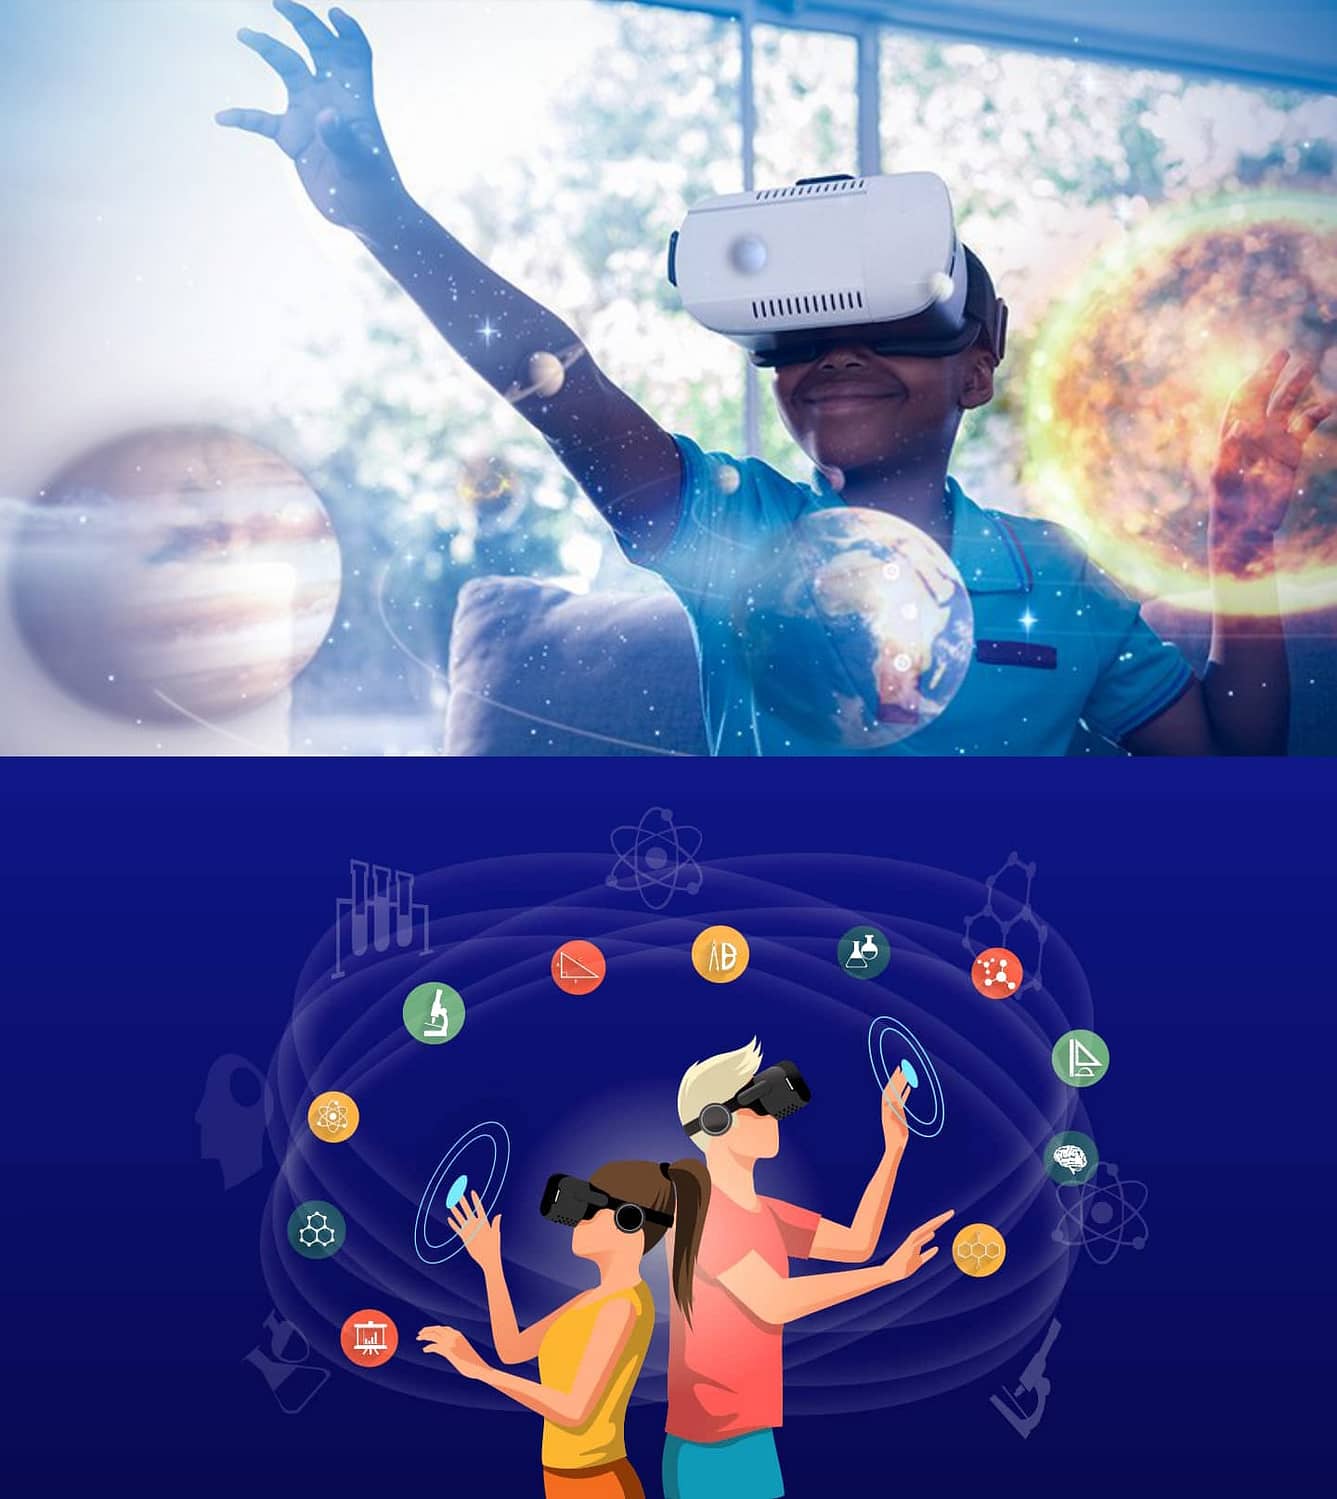 limitations of virtual reality